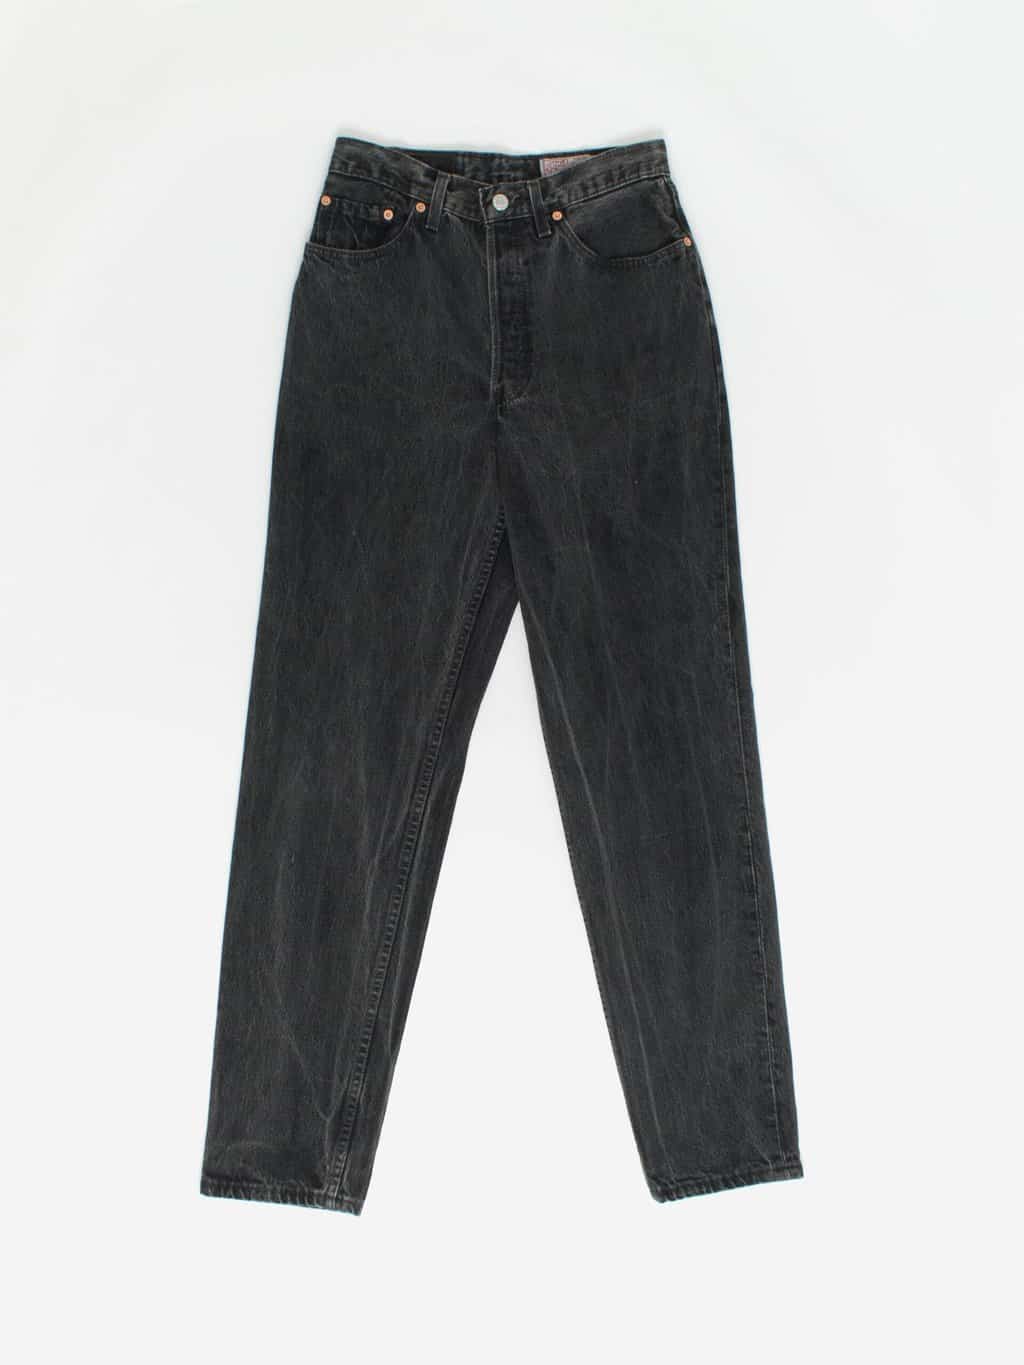 Vintage Levis 901 jeans 28 x 31 black stonewash UK made 90s - St